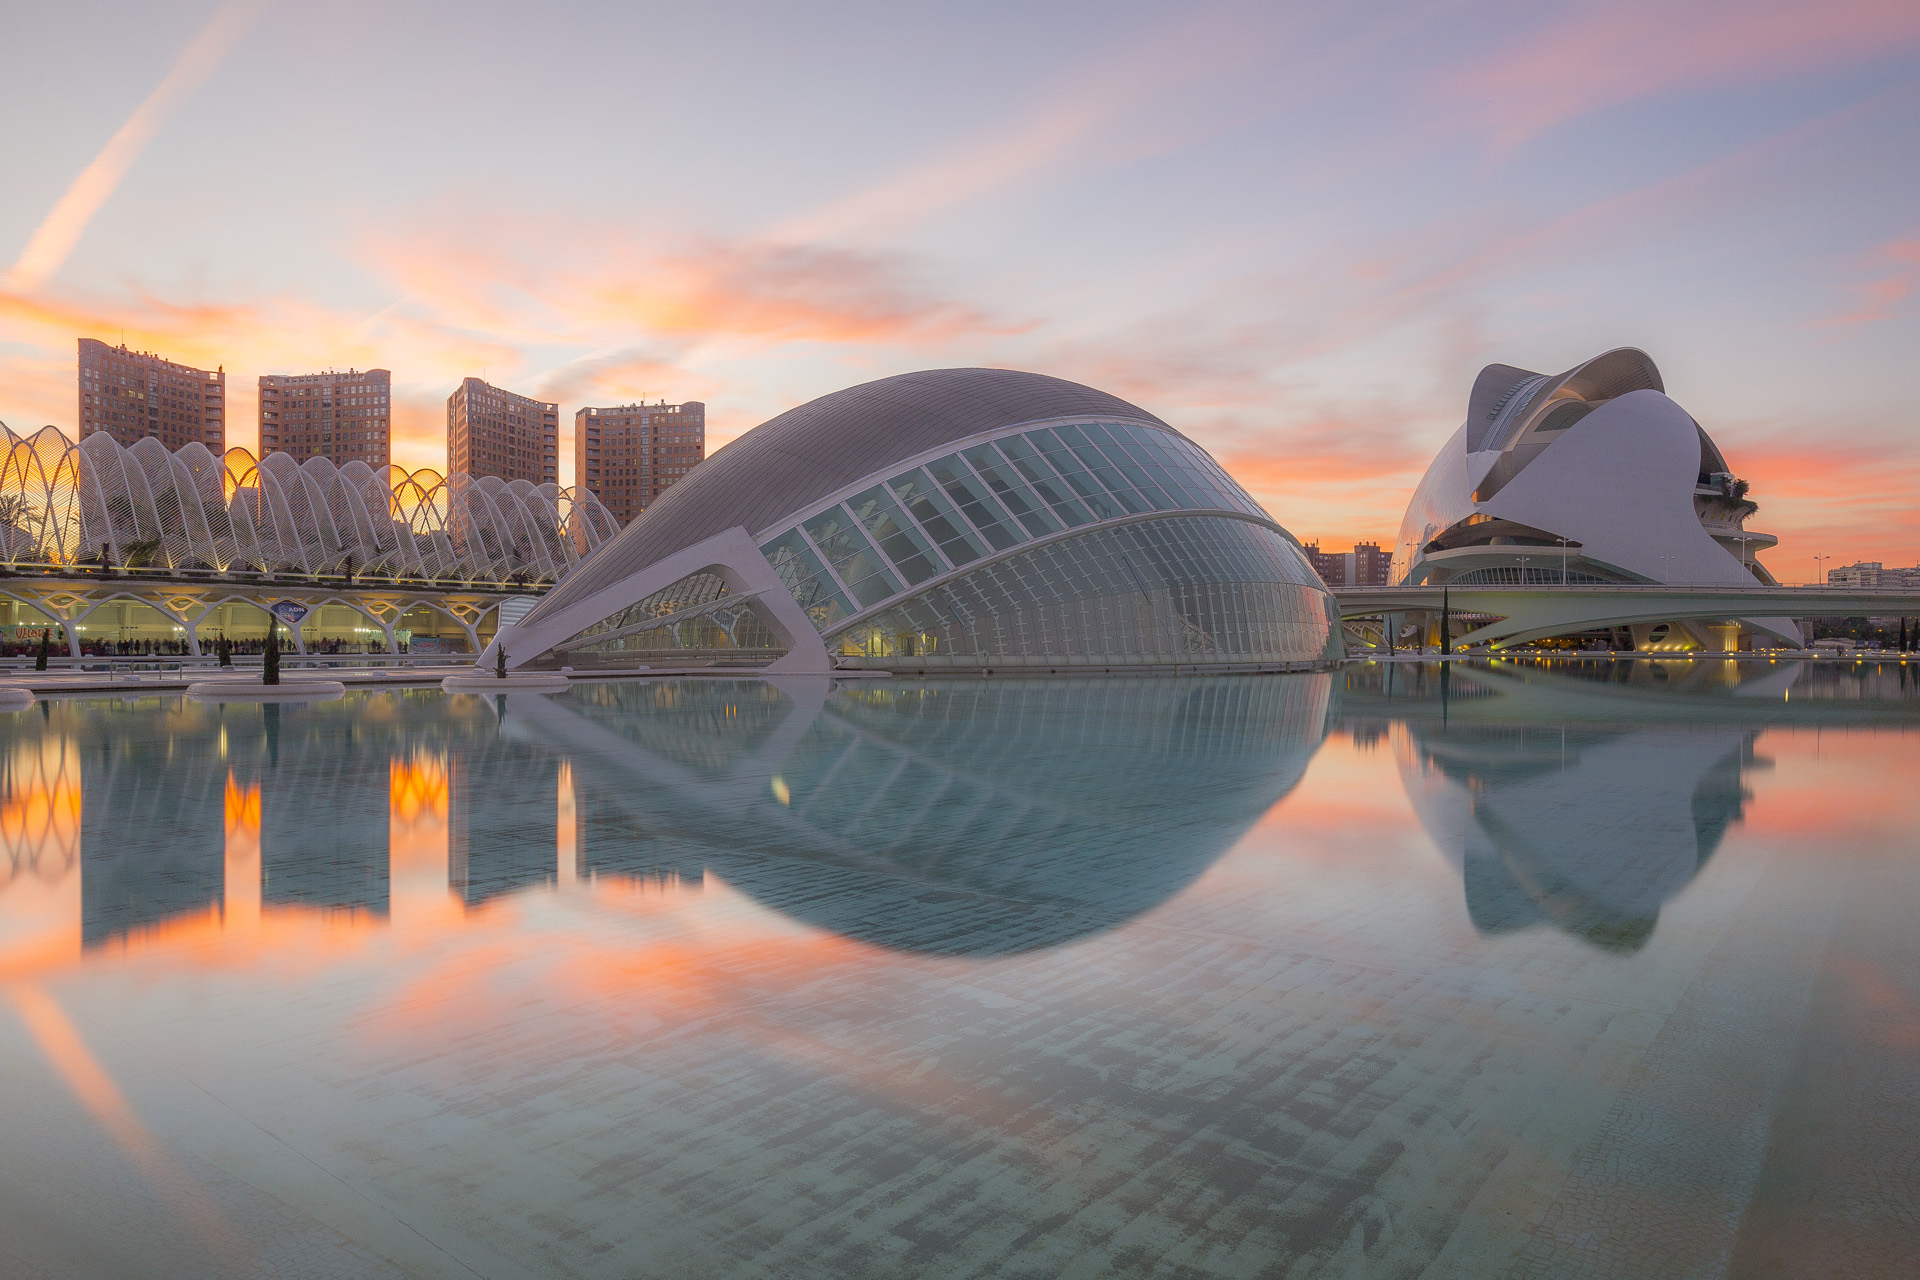 Valencia's City of Art & Sciences